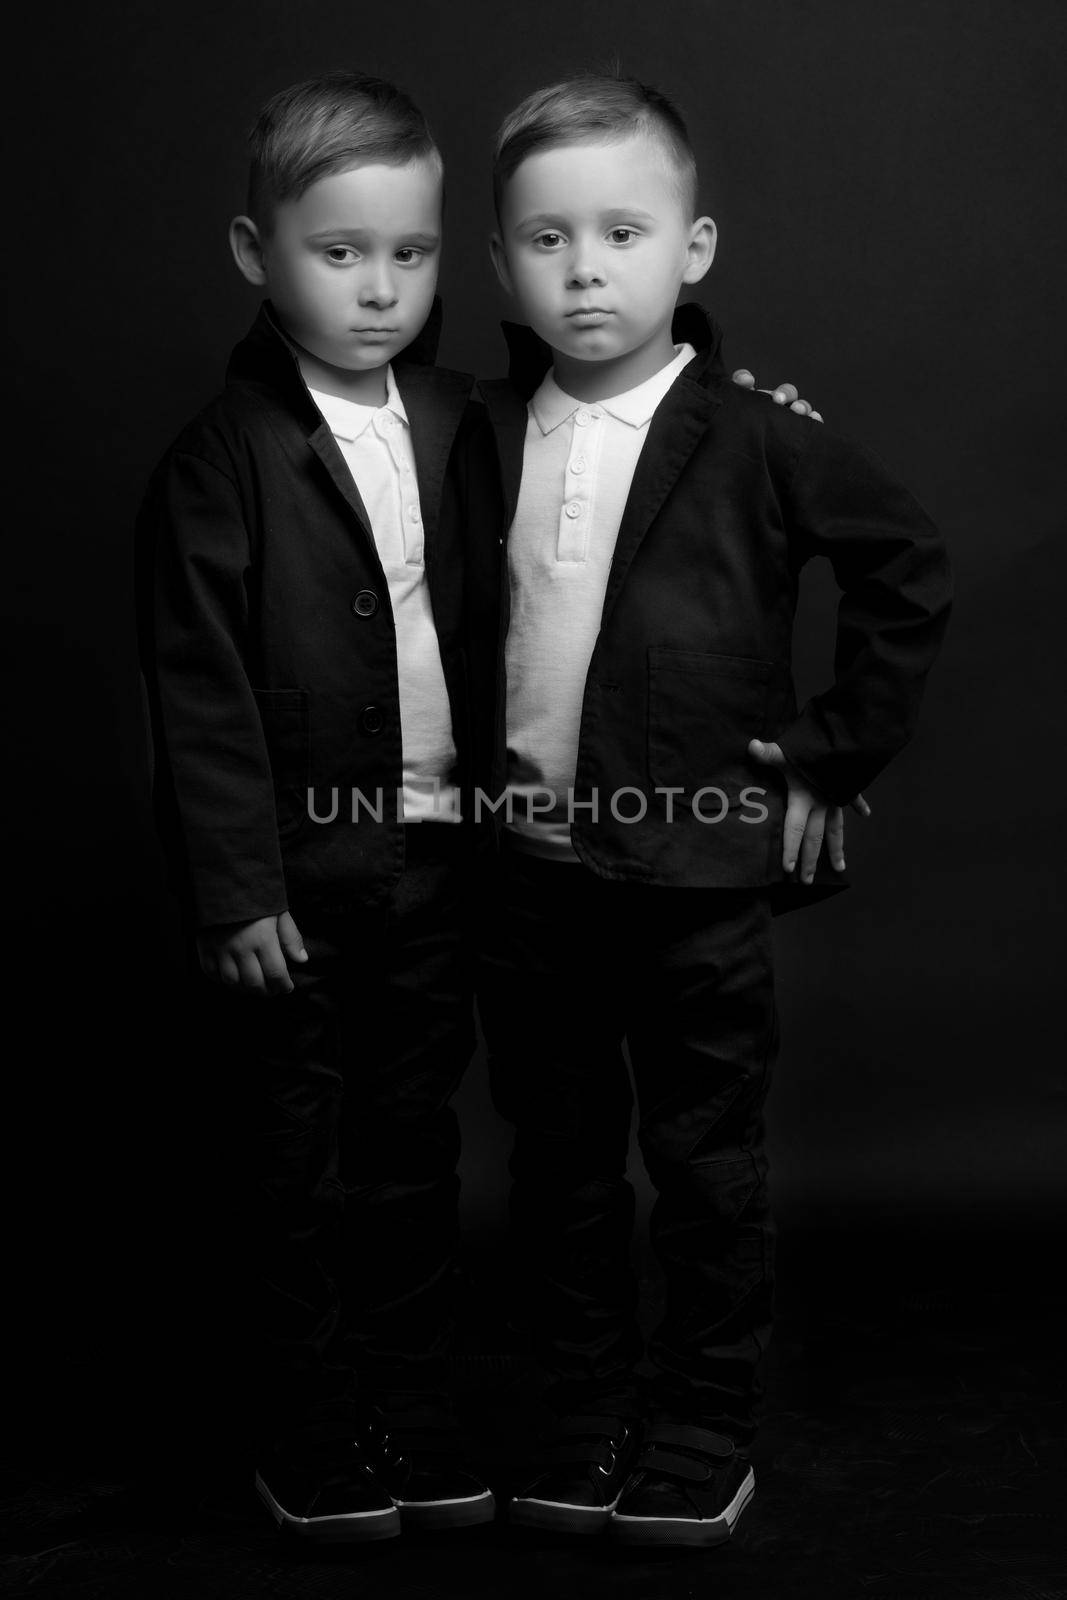 Two beautiful boys in black suits by kolesnikov_studio